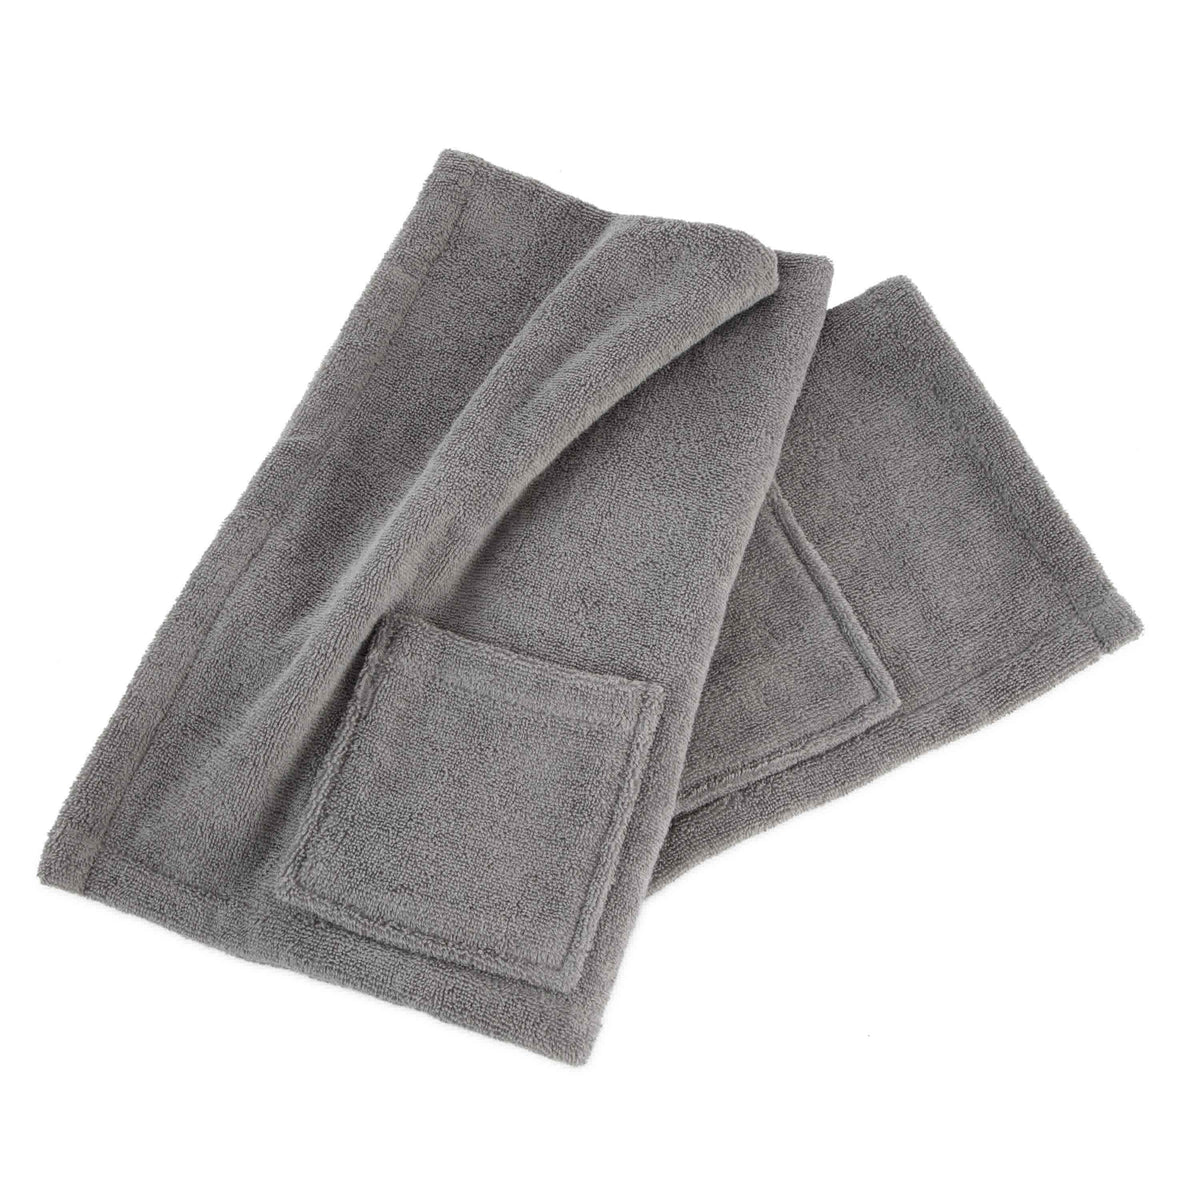 Martex-The Clean Towel-Silverbac Antimicrobial-Bath Towel 1 Dz